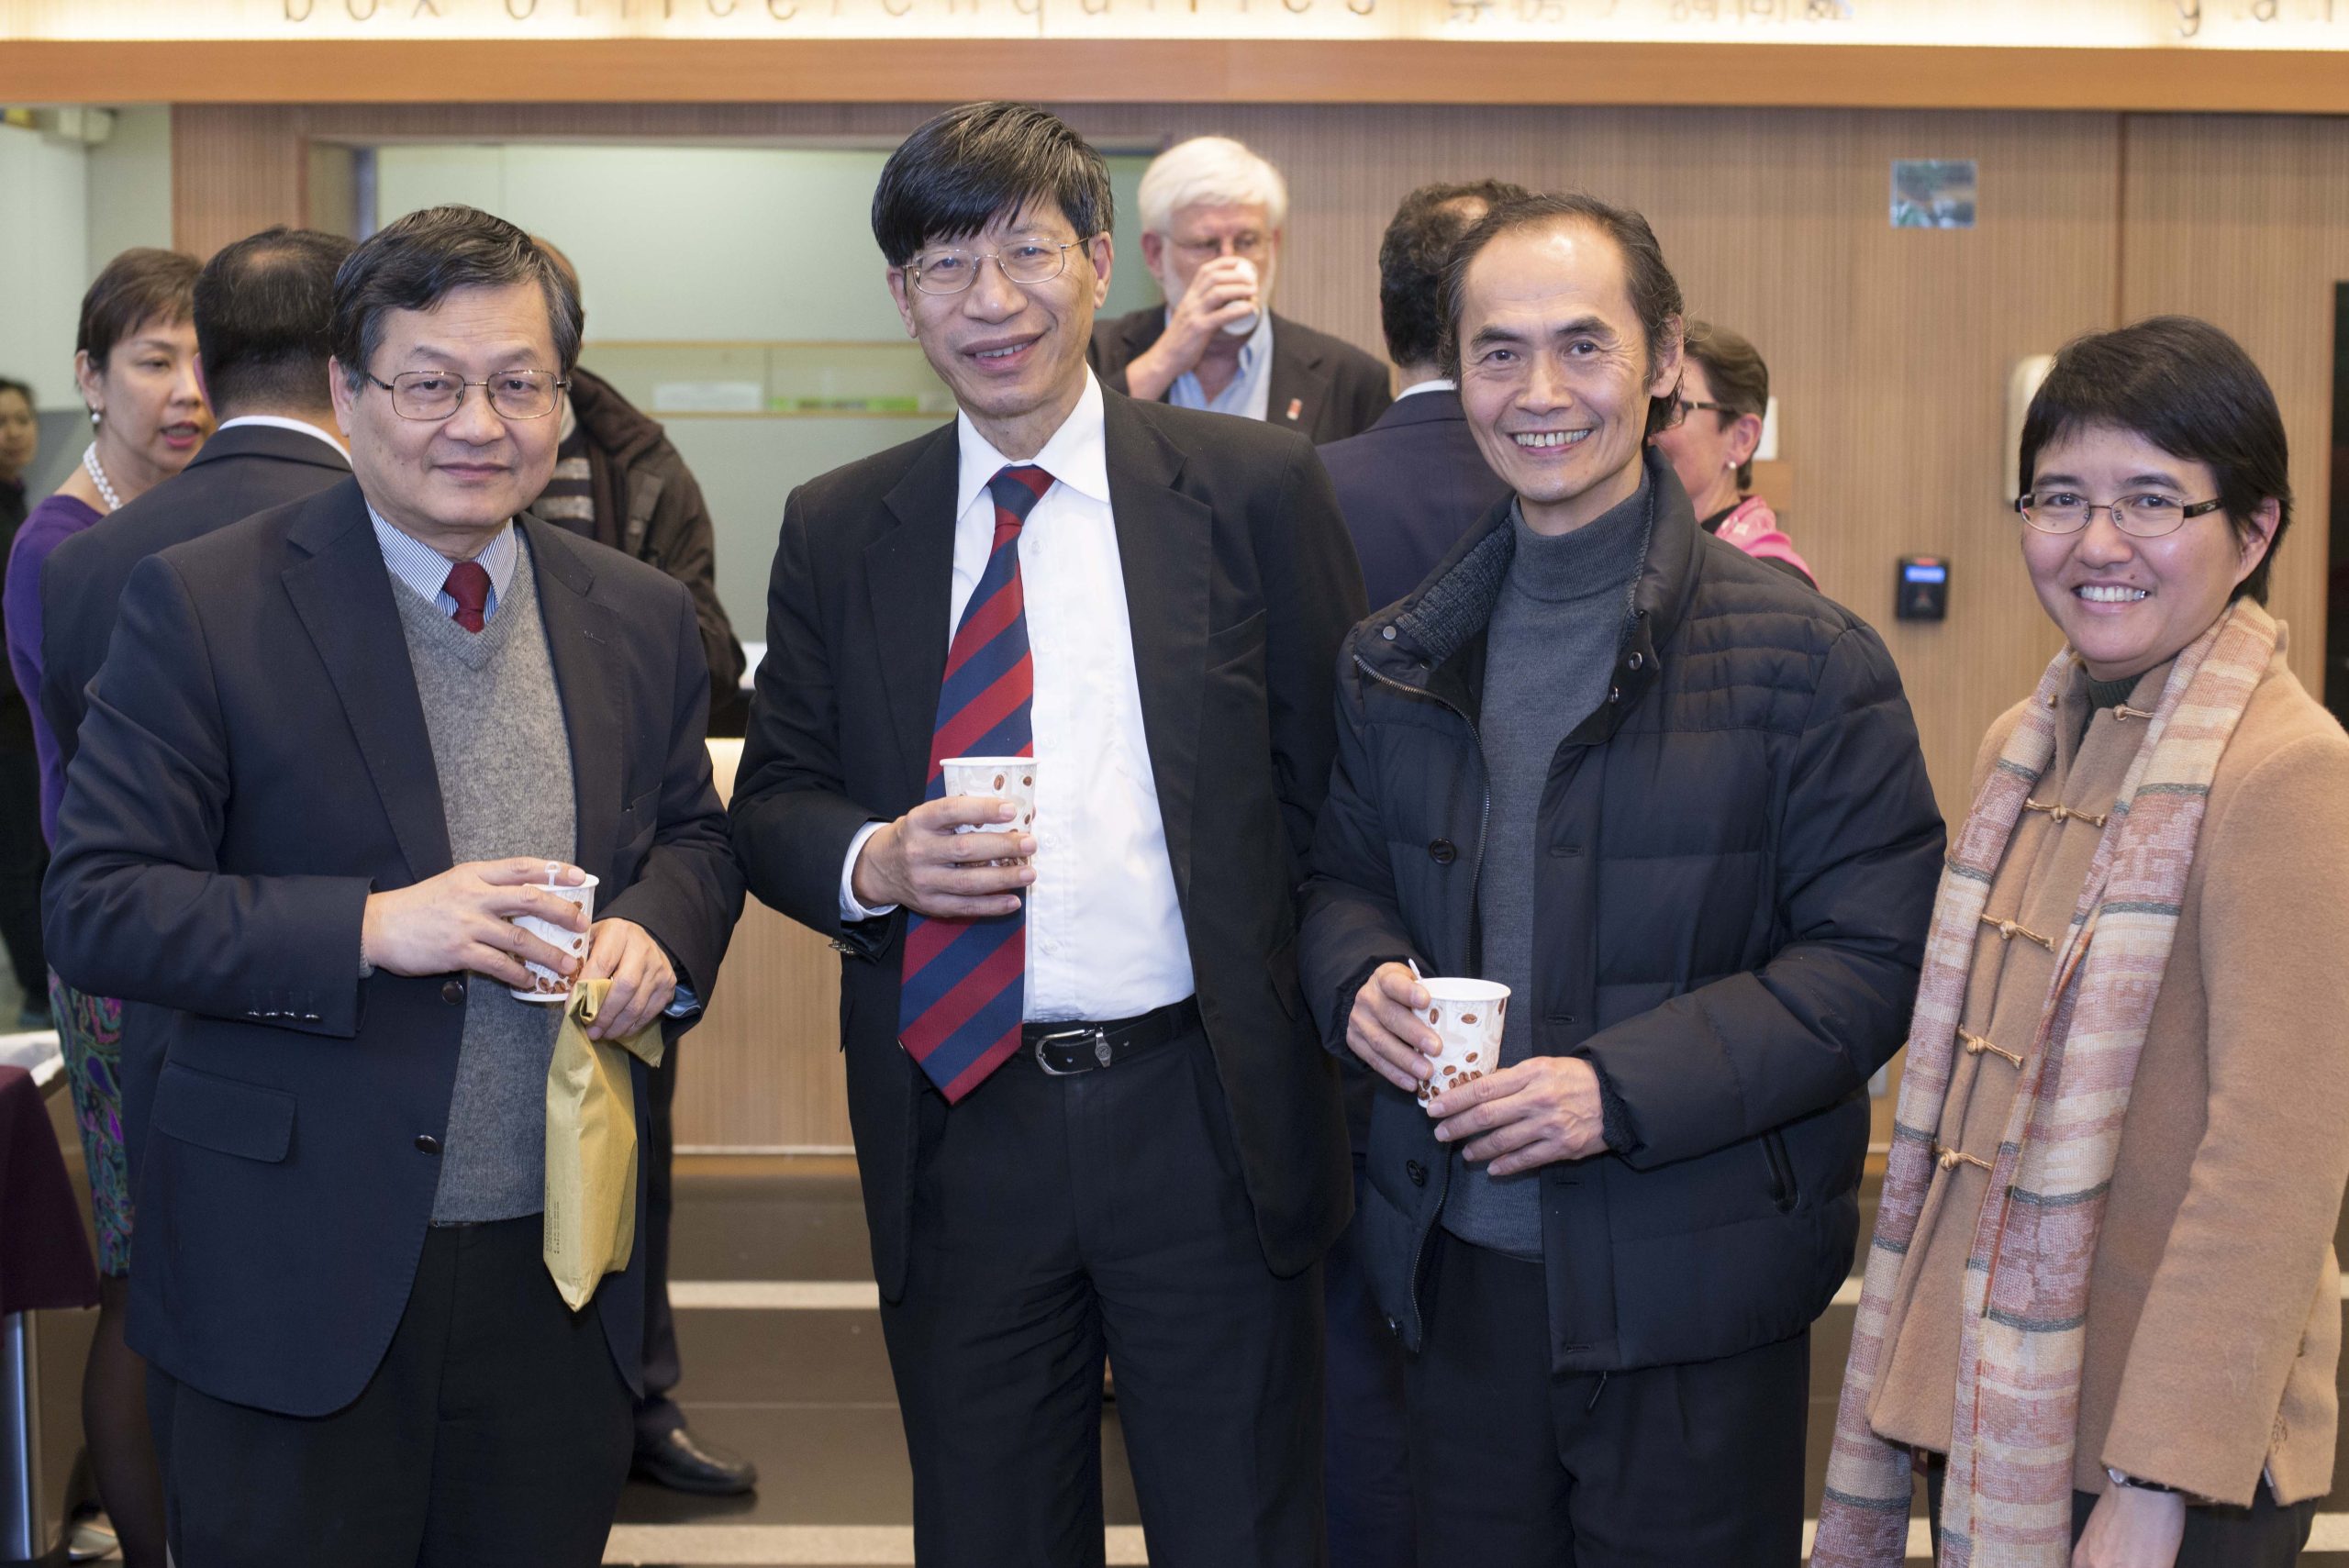 Prof. Leung Yuen Sang, Prof. Kenneth Young, Prof. Leung Yee and Prof. Leung Mei Yee